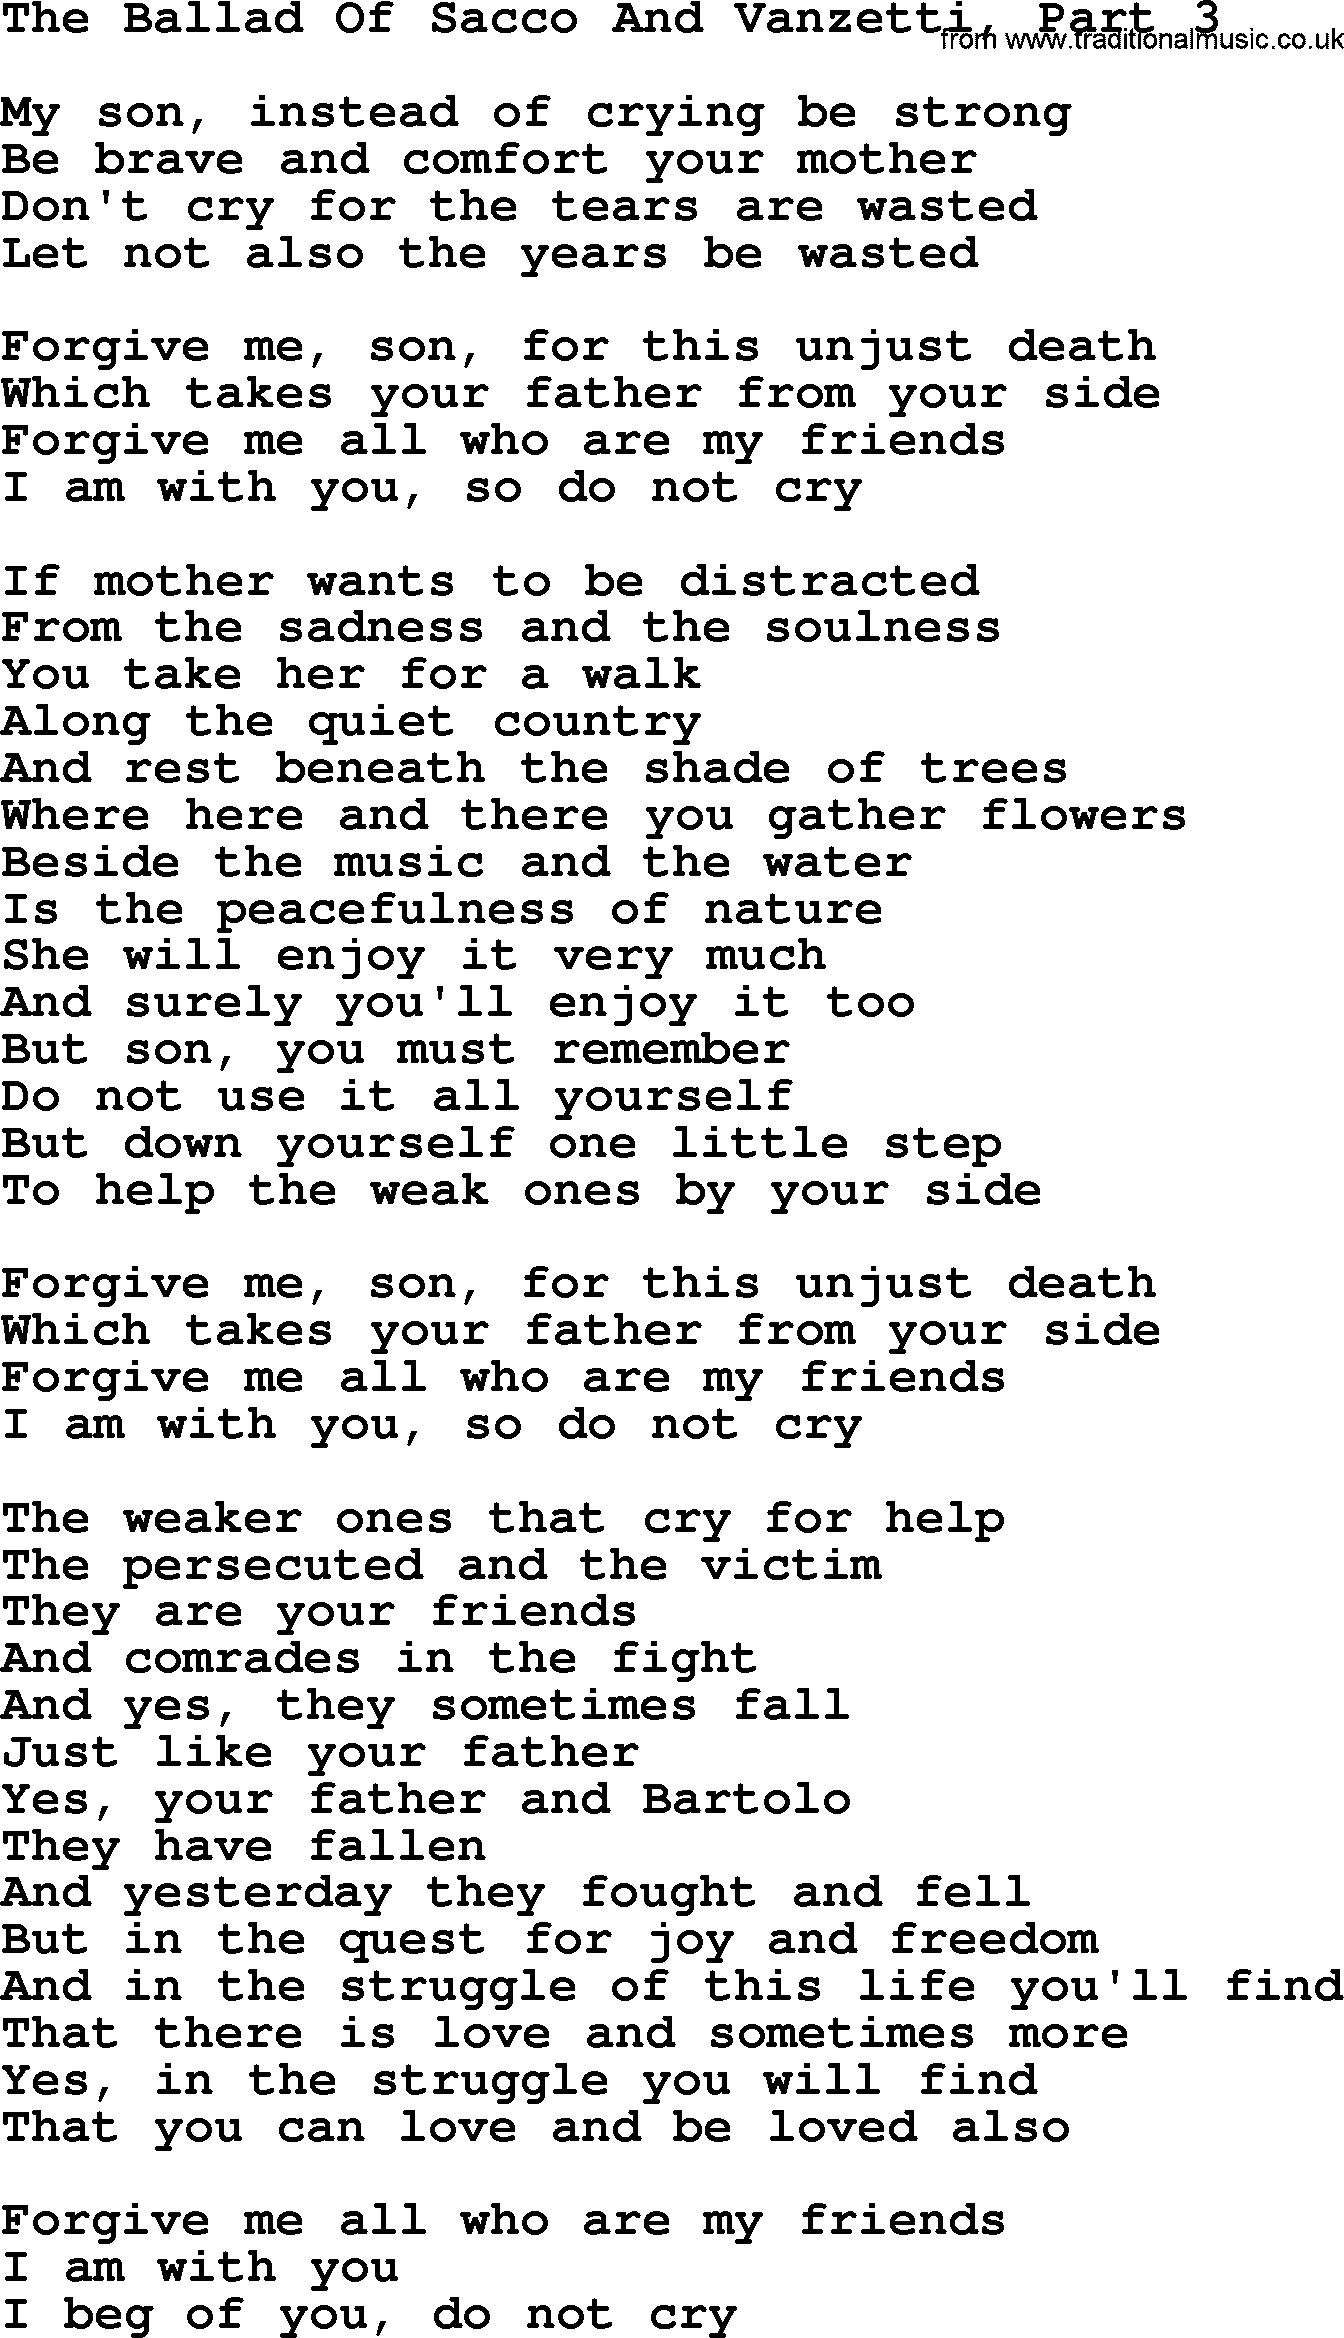 Joan Baez song The Ballad Of Sacco And Vanzetti, Part 3, lyrics